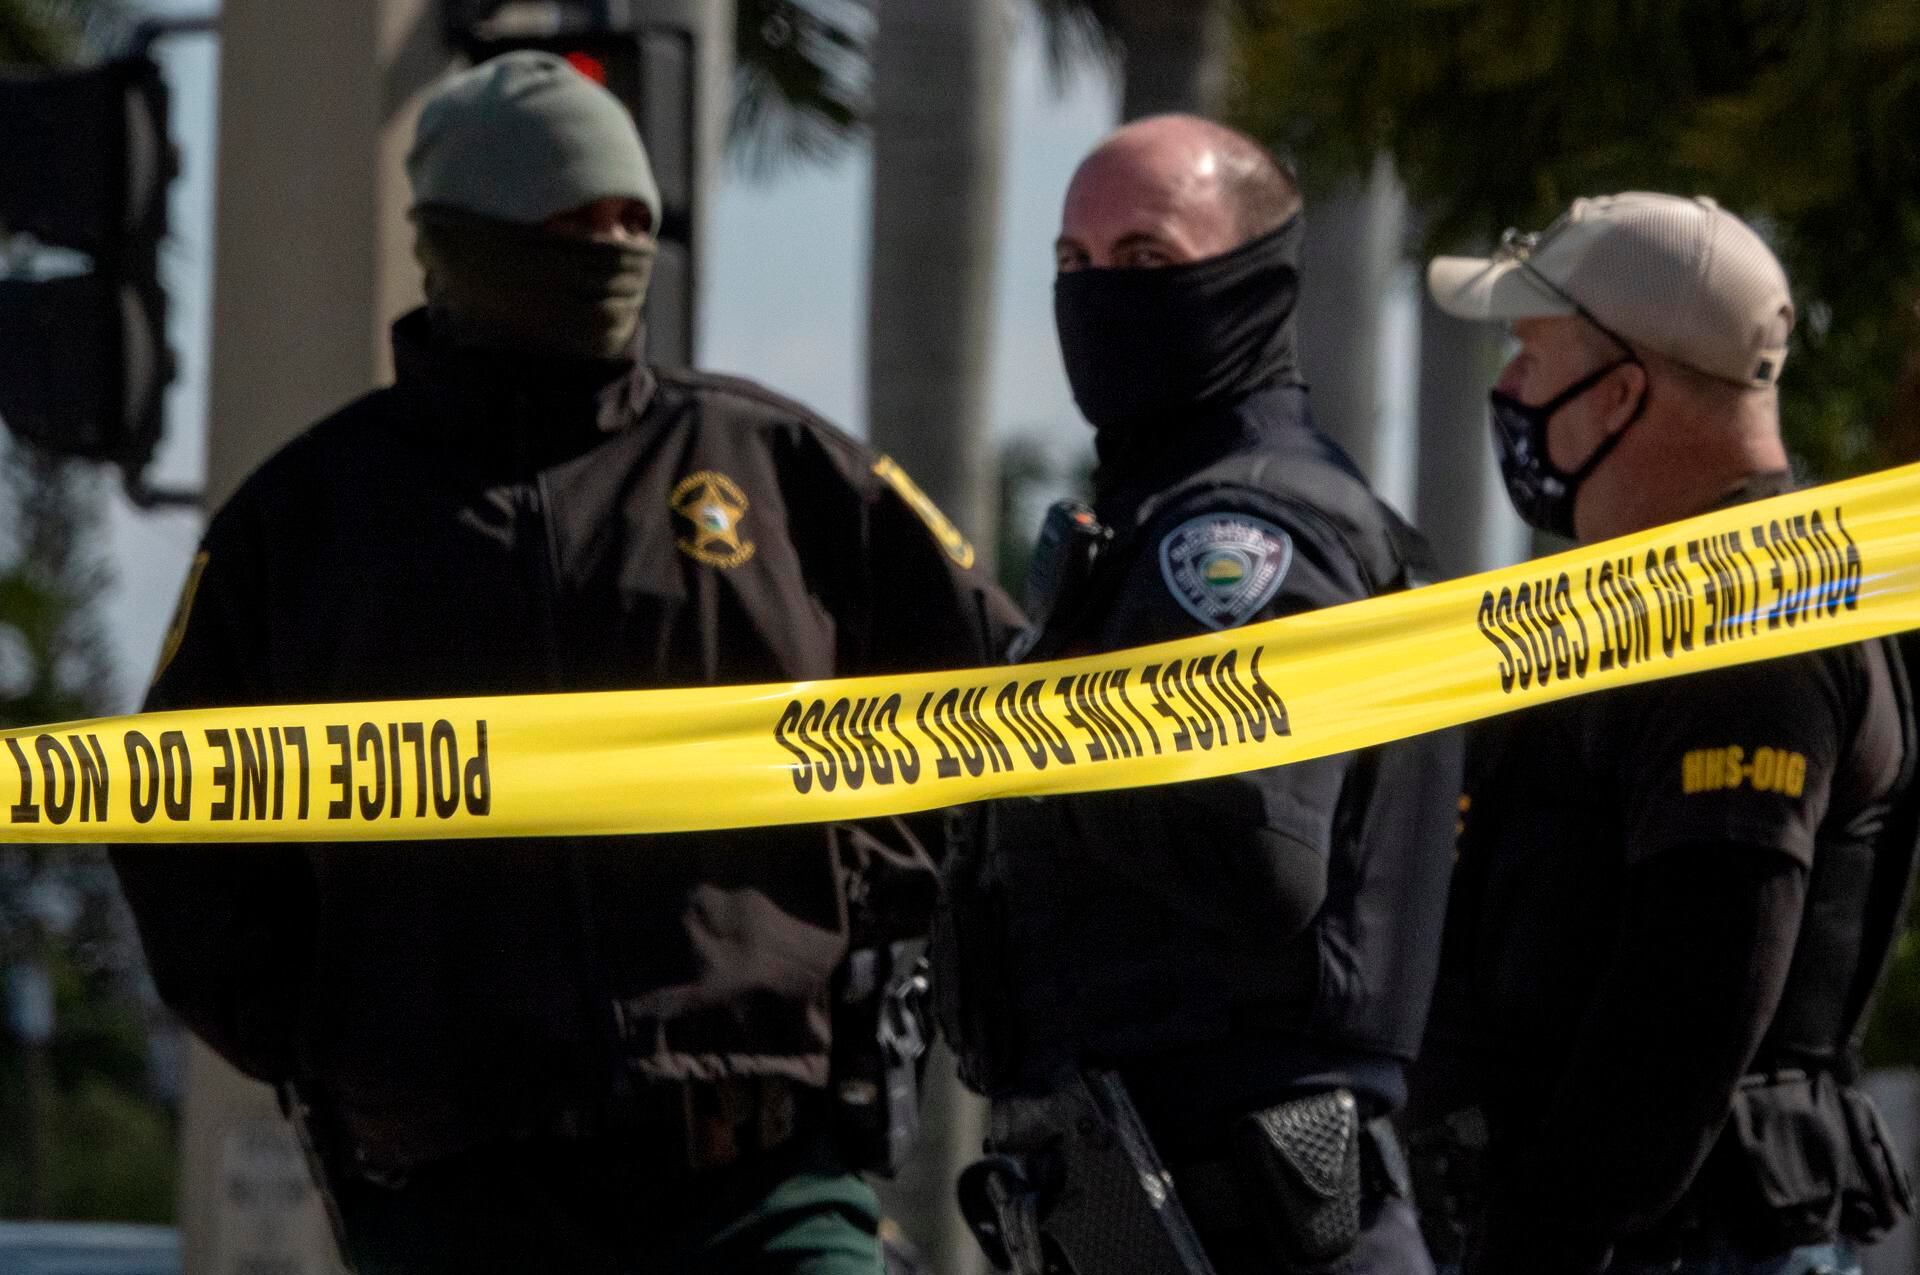 Tiroteo en Florida: Investigan el ataque en Florida como un crimen racial